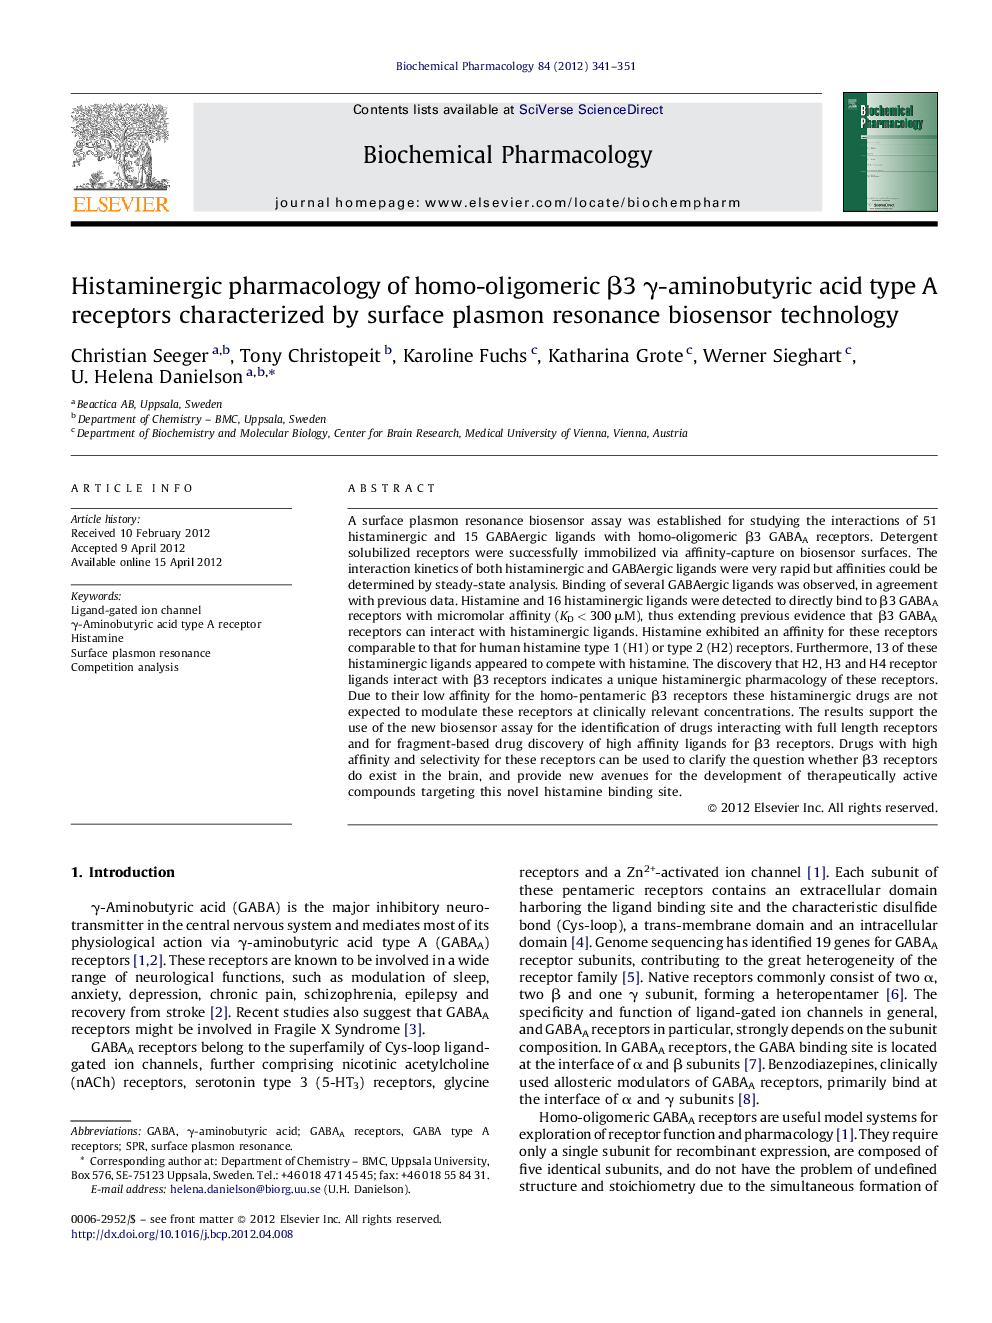 Histaminergic pharmacology of homo-oligomeric Î²3 Î³-aminobutyric acid type A receptors characterized by surface plasmon resonance biosensor technology